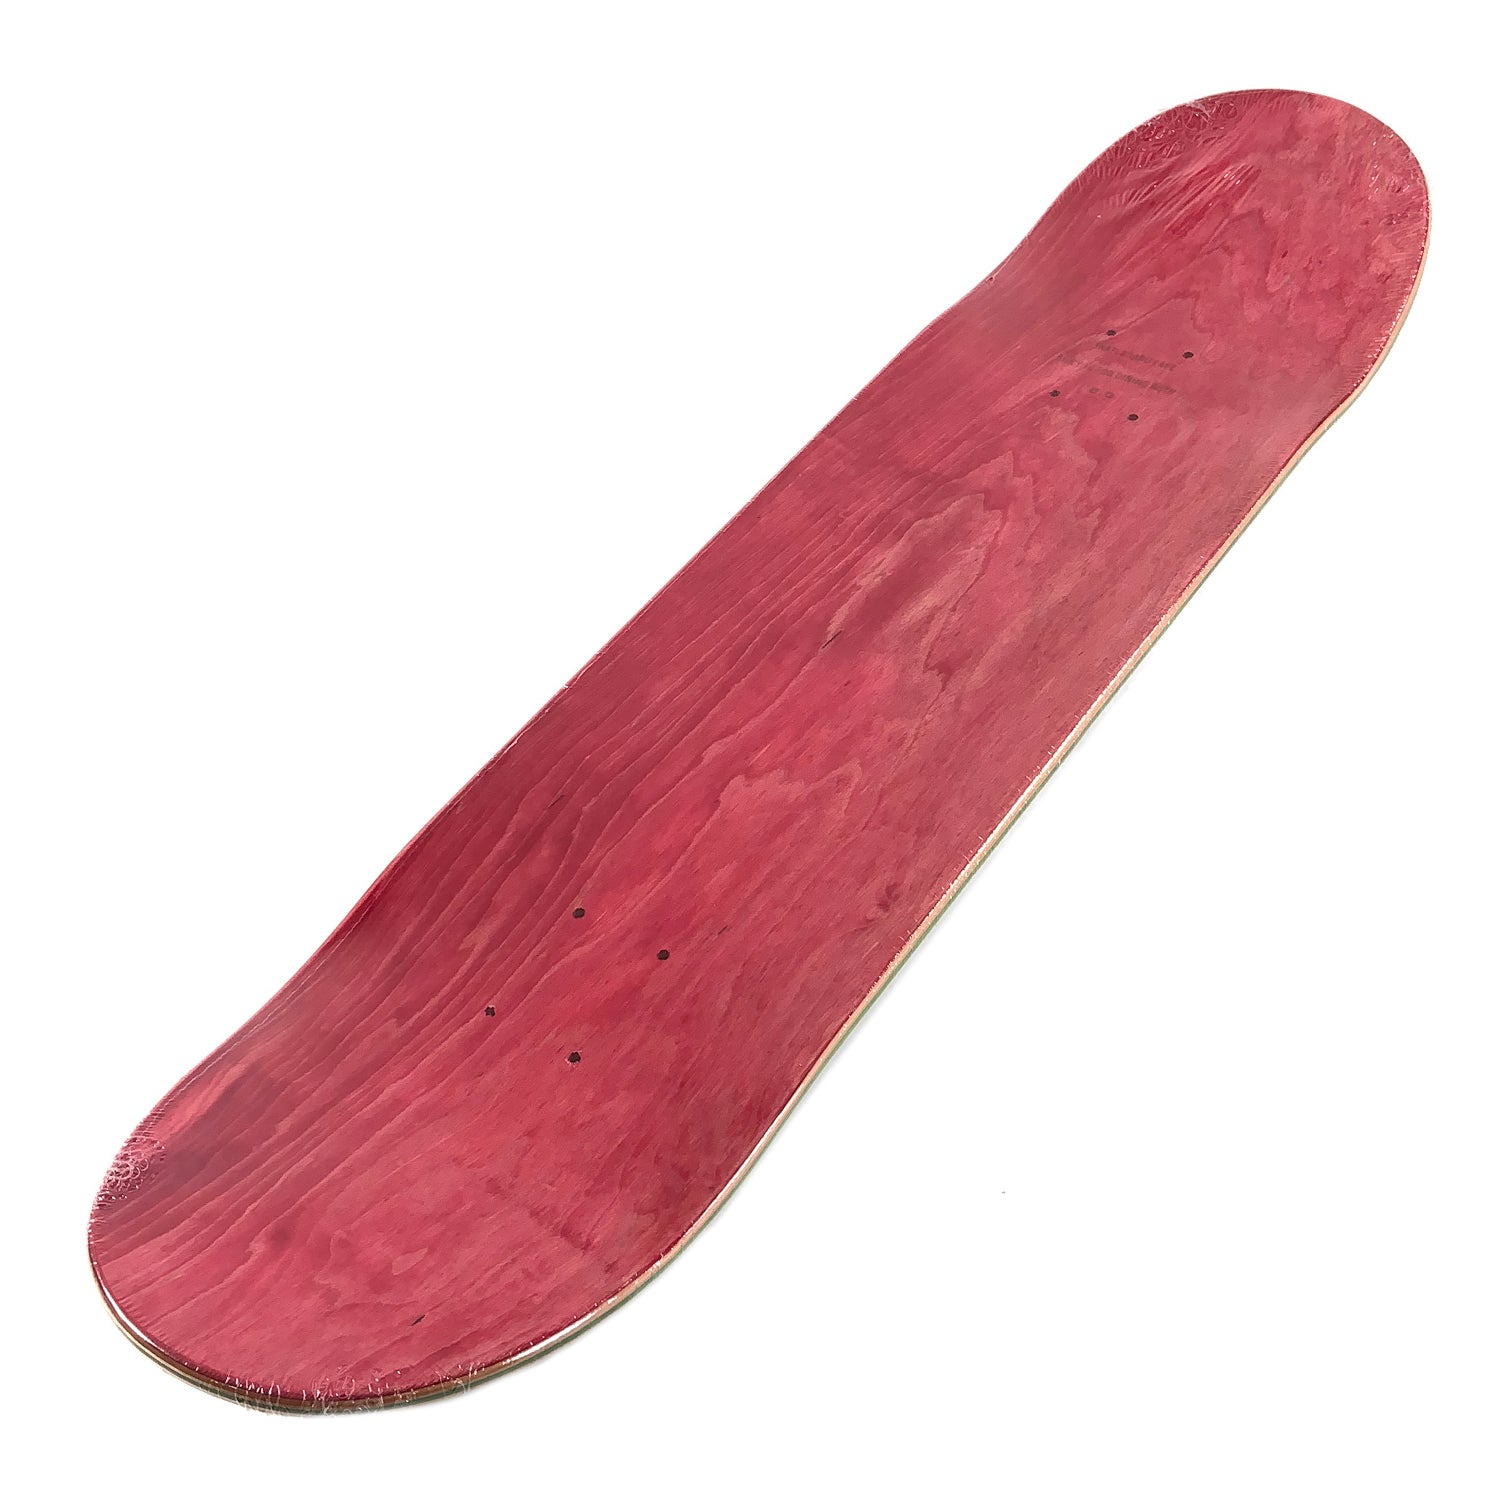 Skateboard Cafe - 8" - Pink Lady Deck - Prime Delux Store